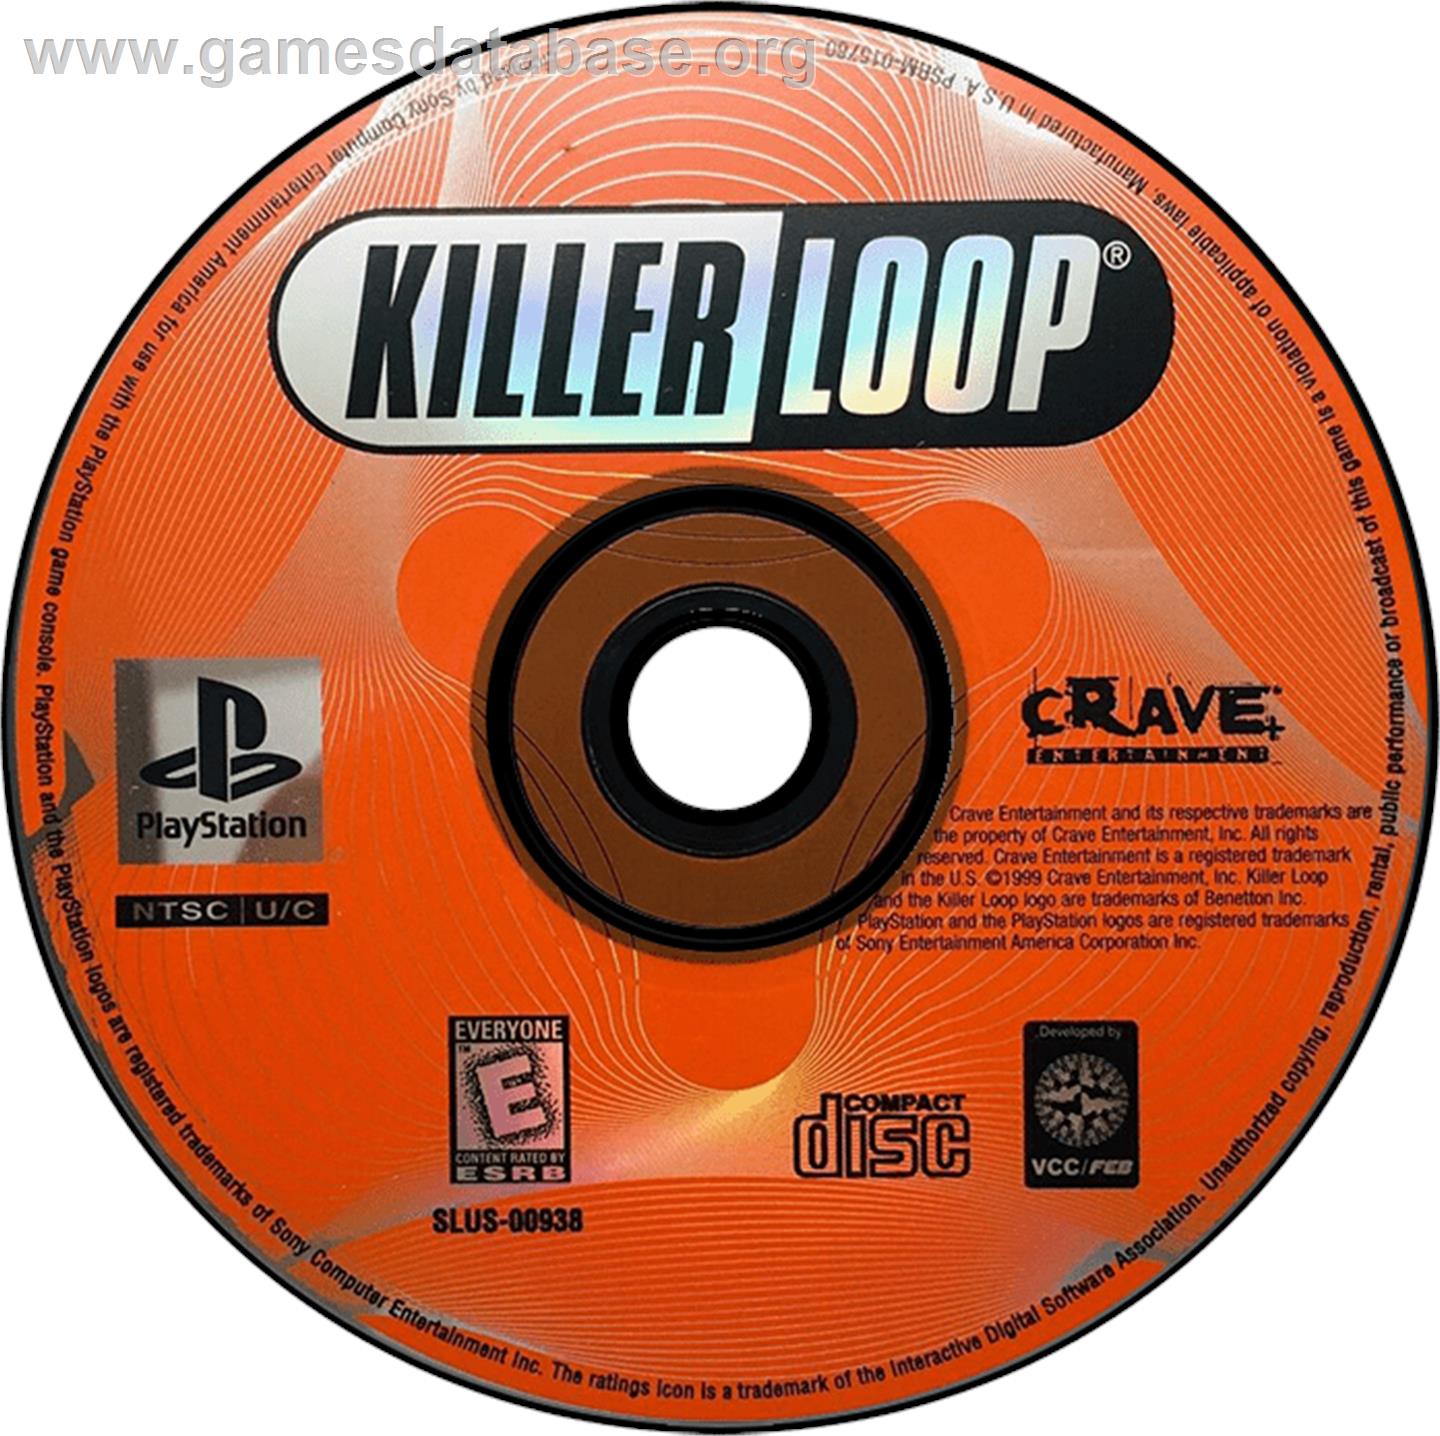 Killer Loop - Sony Playstation - Artwork - Disc